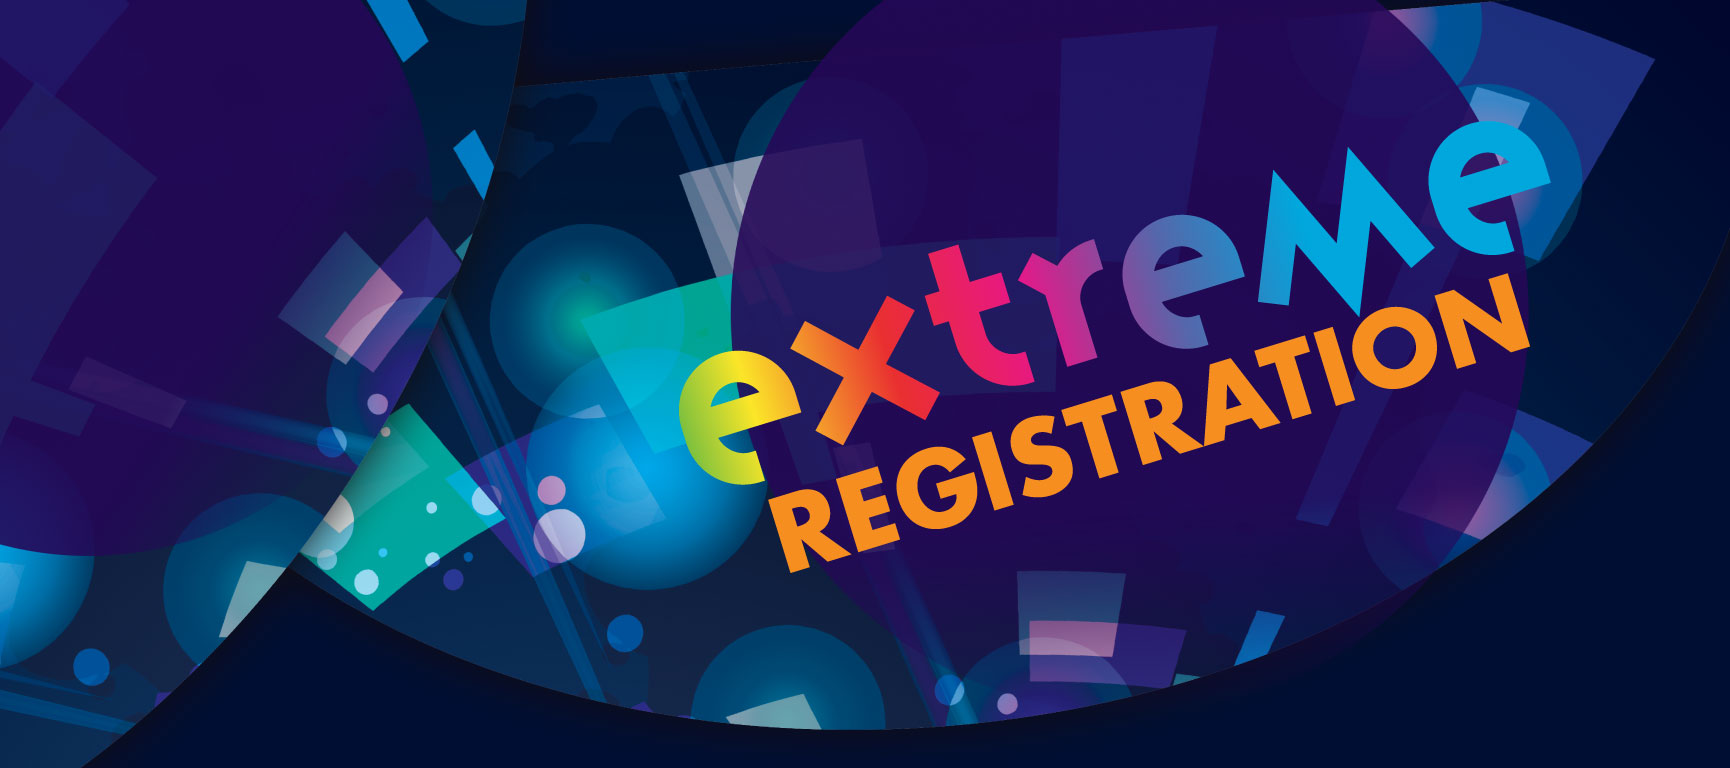 Extreme Registration